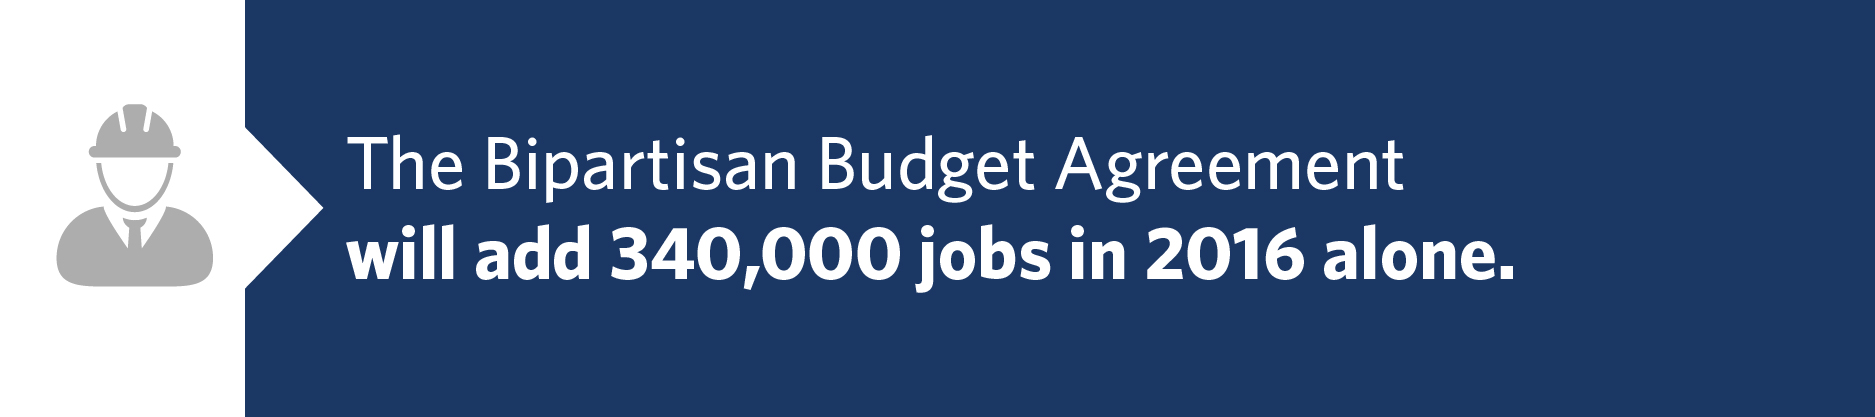 Bipartisan Budget Agreement Adds 340,000 Jobs